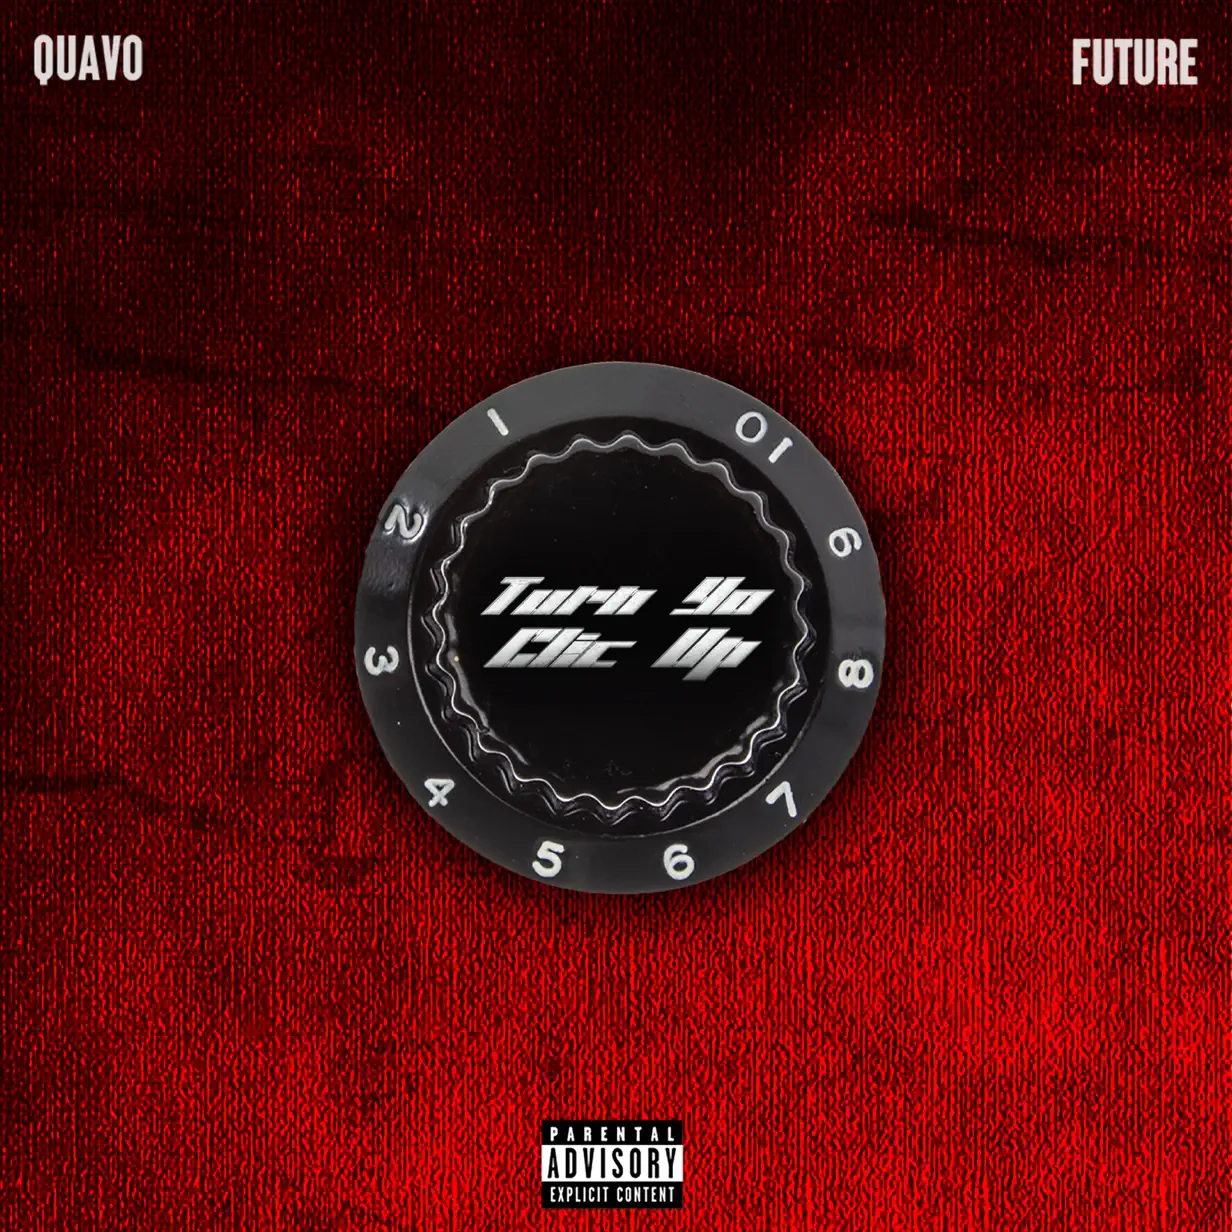  Quavo Feat. Future Turn Yo Clic Up Download MP3